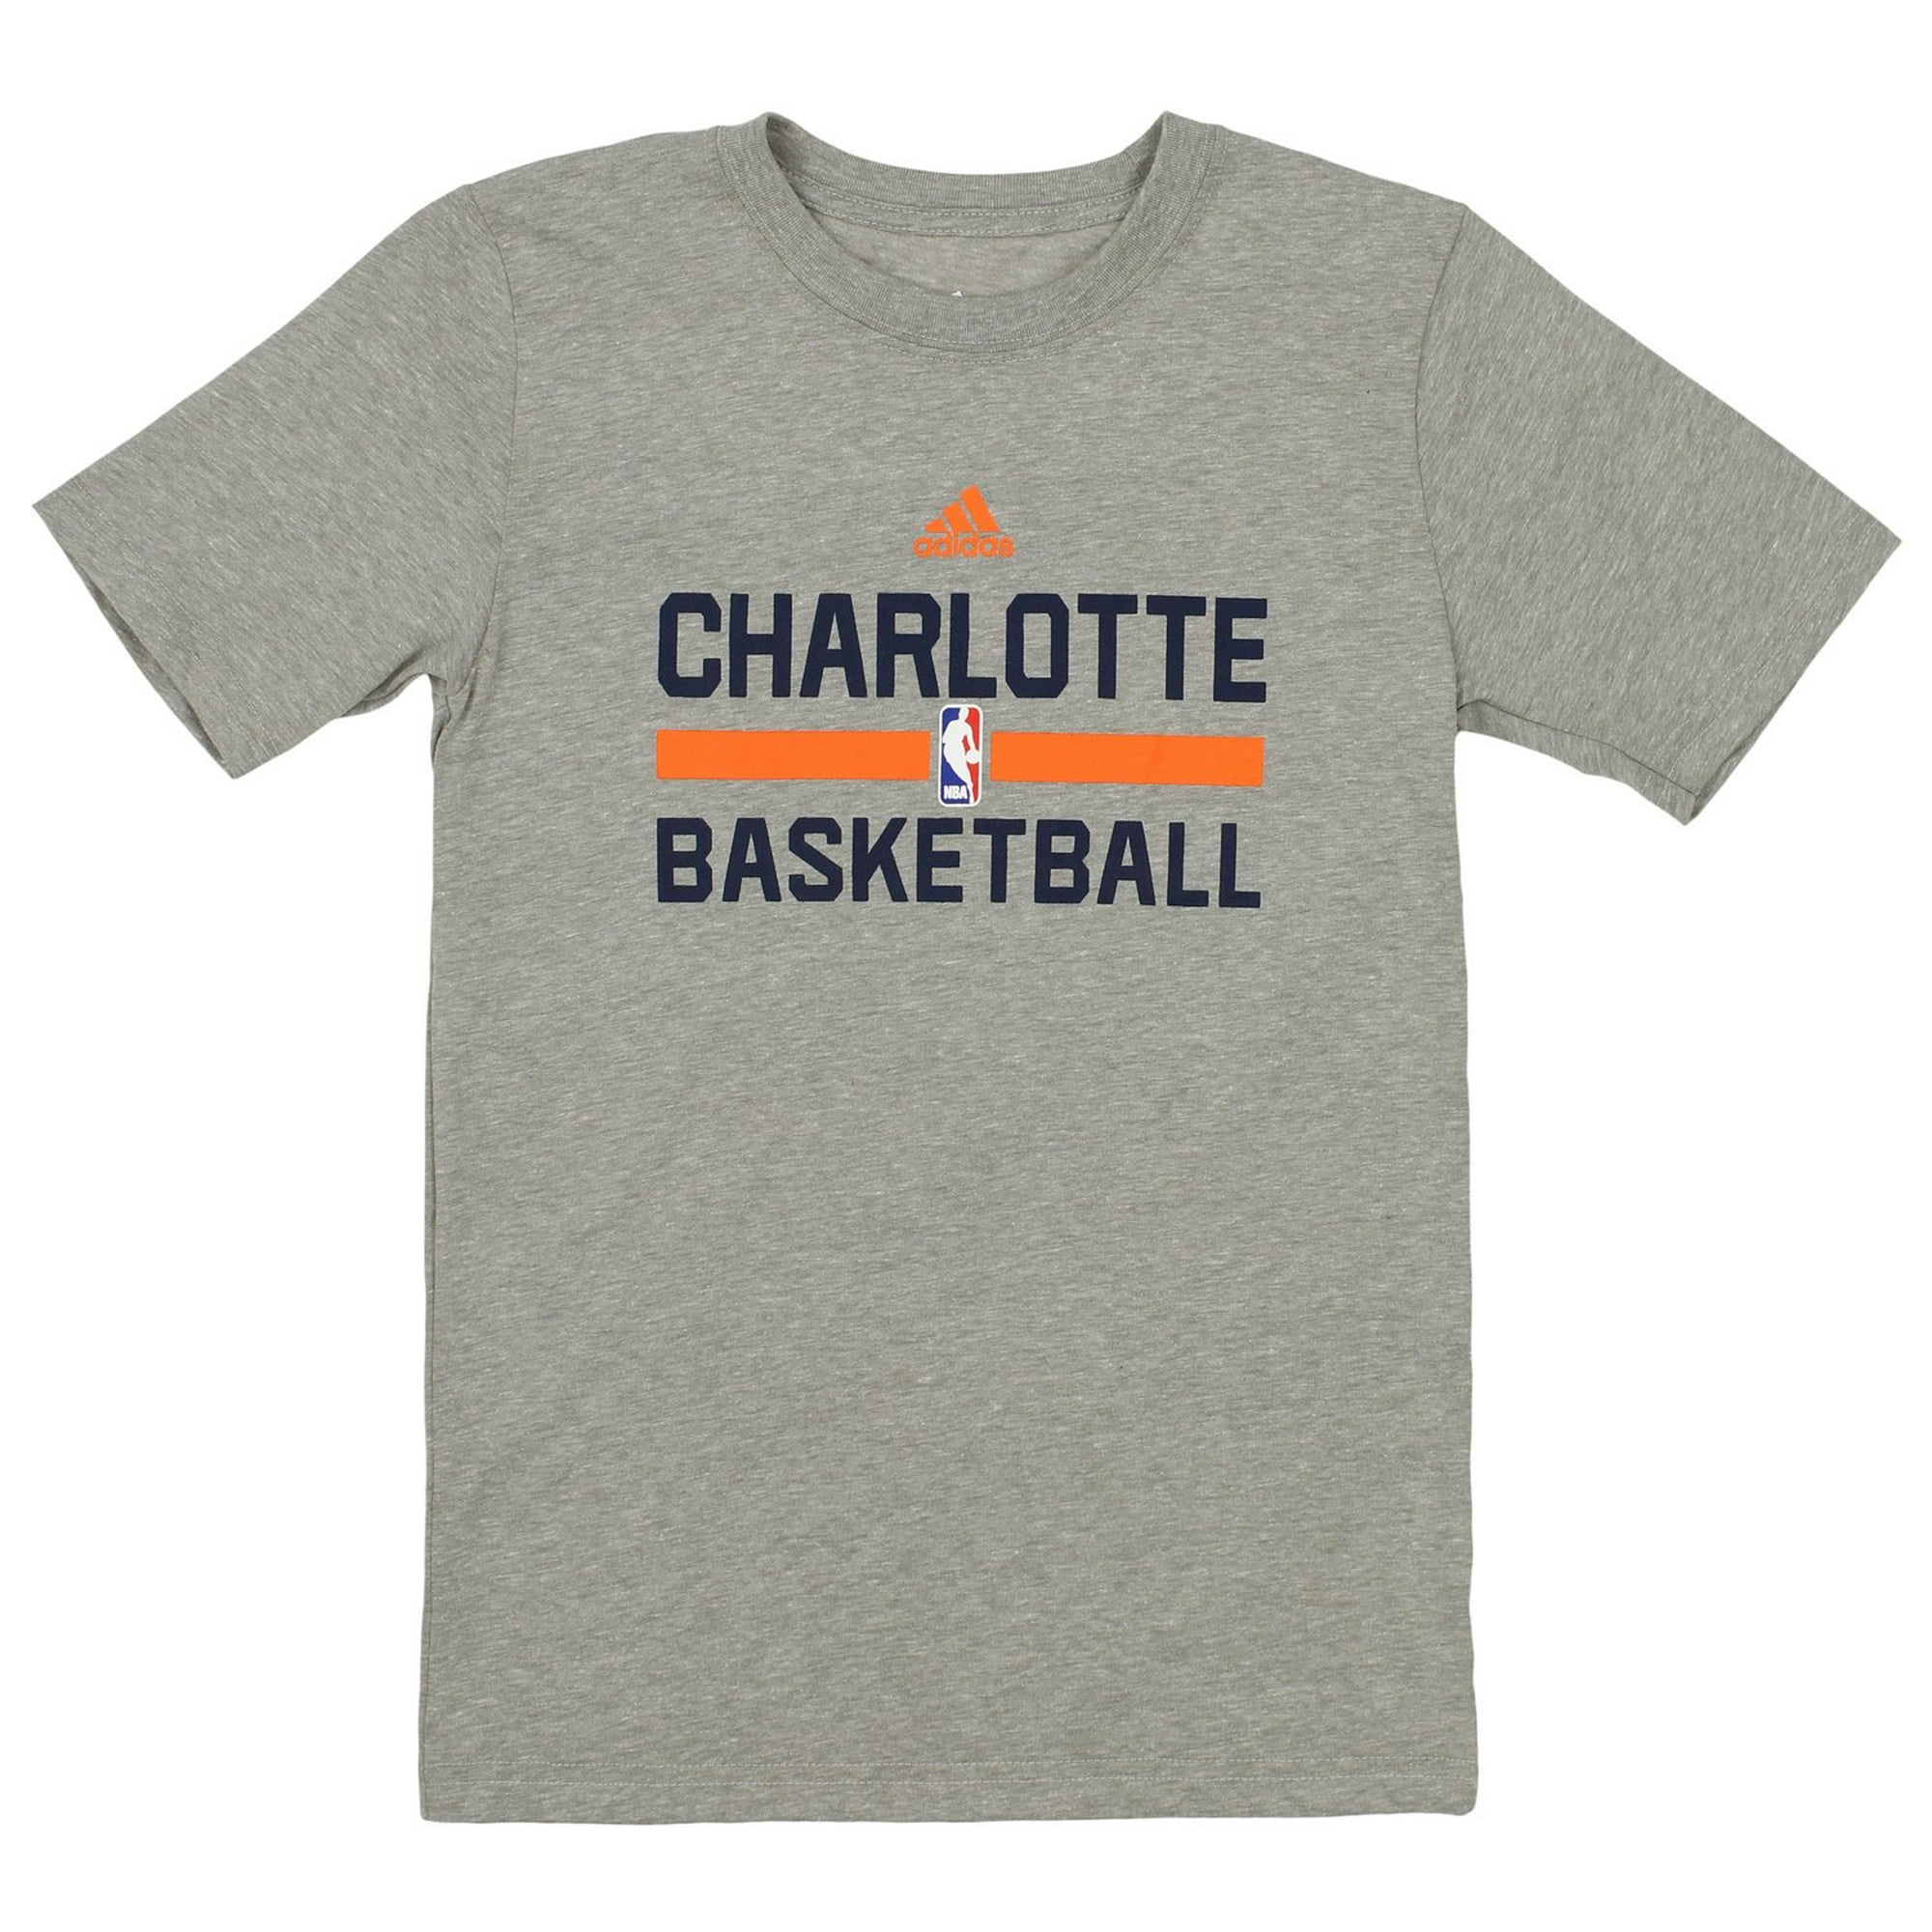 Adidas NBA Basketball Youth Charlotte Bobcats Practice Tee Shirt, Gray 